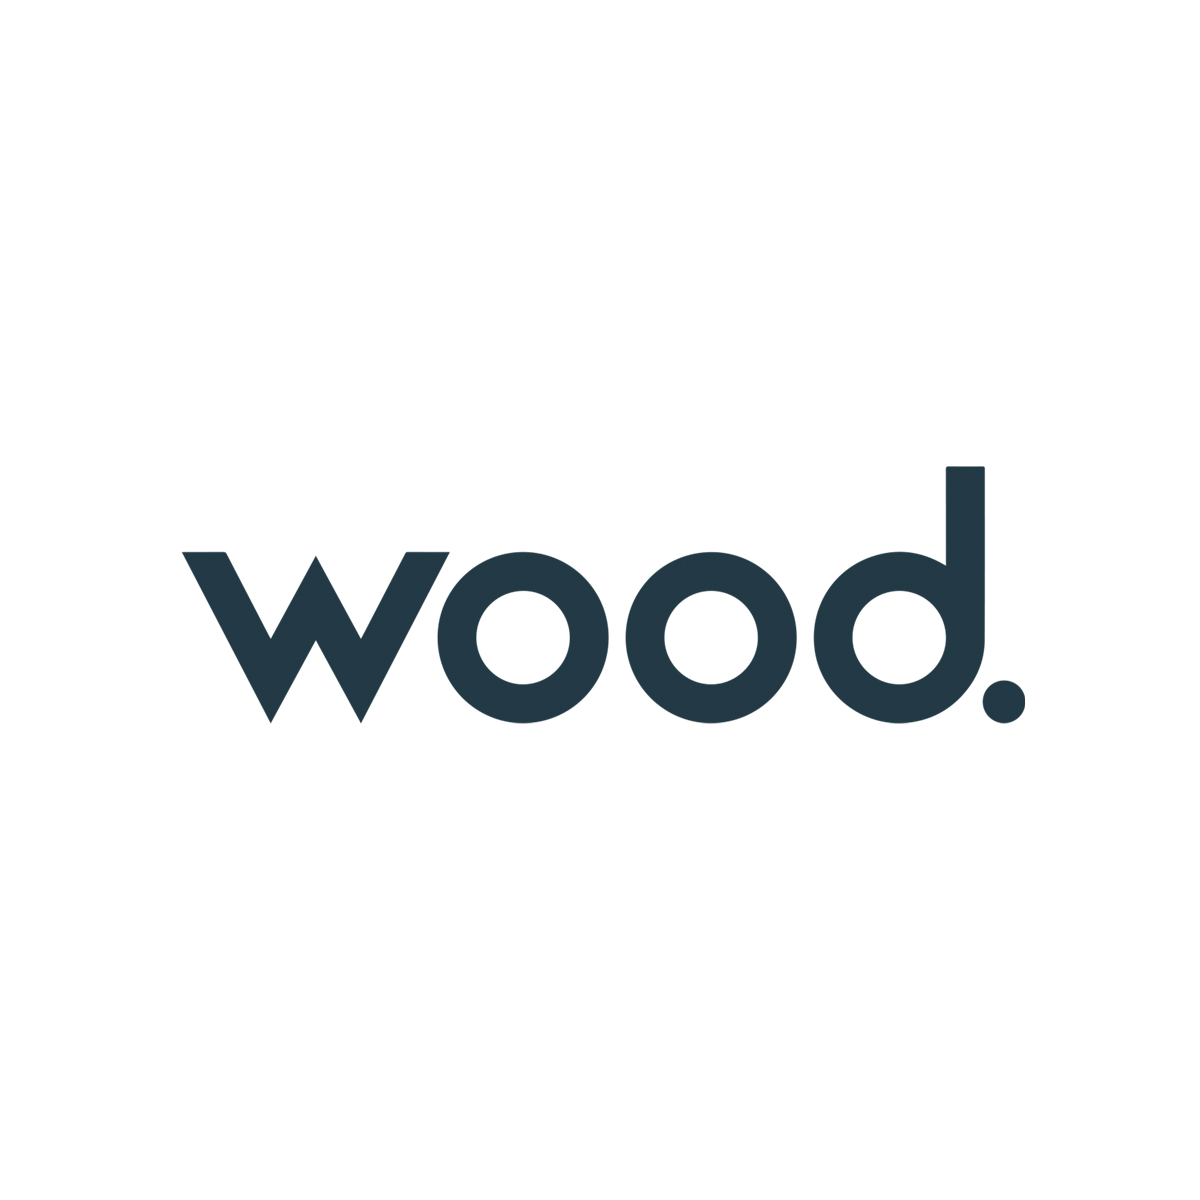 Wood logo.jpg